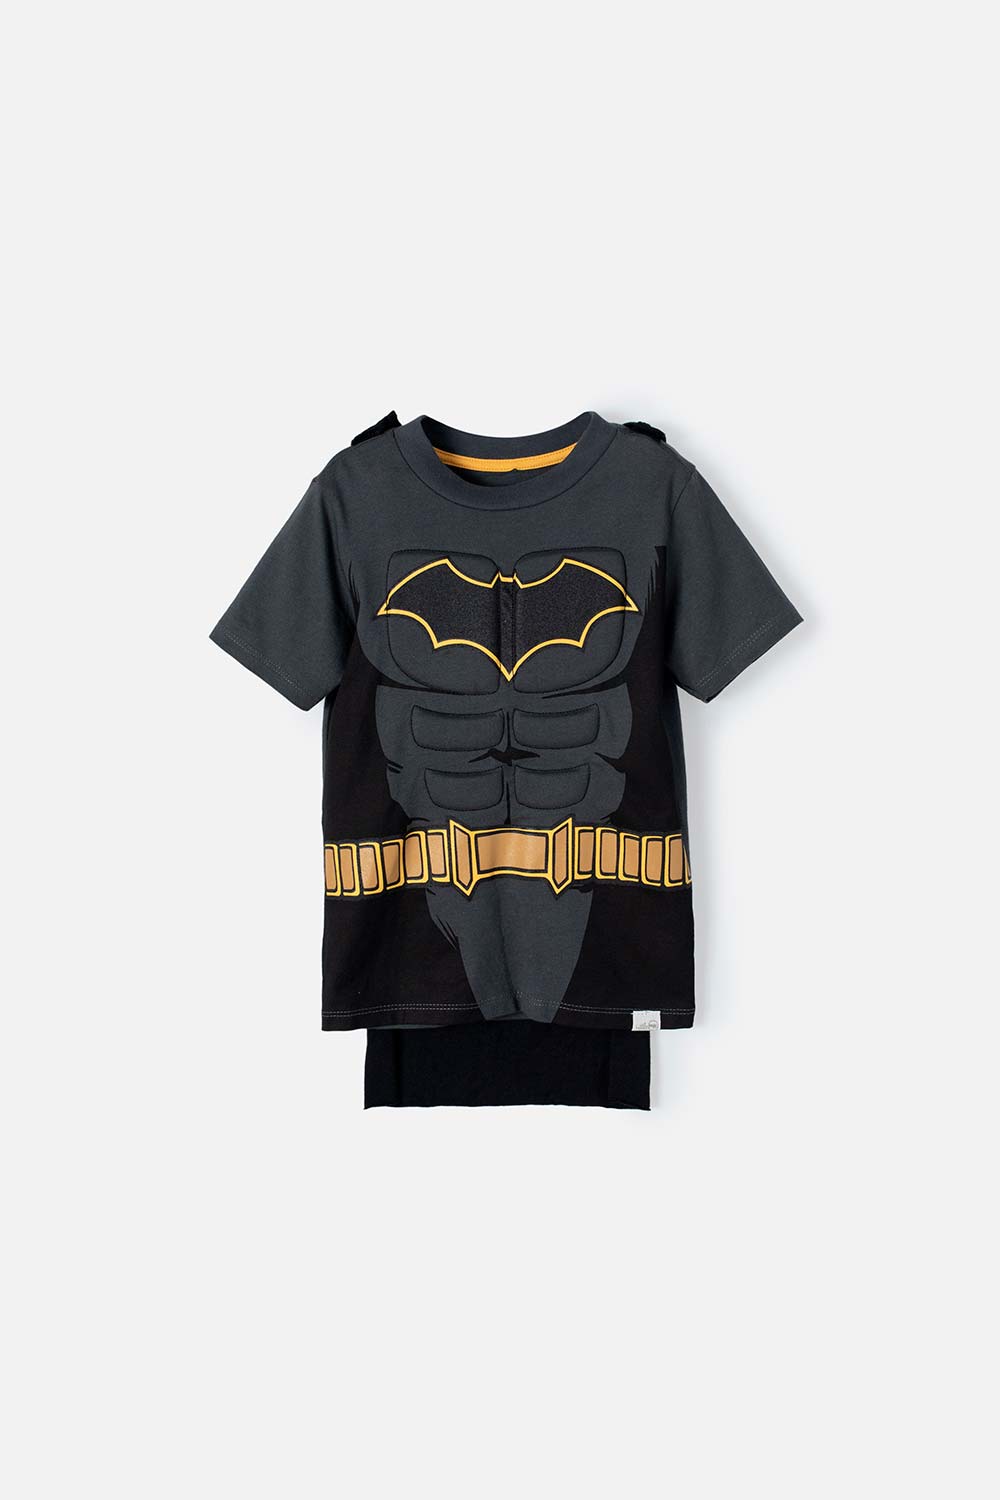 Camiseta de Batman con capa removible para niño de 2T a 5T 3T-0